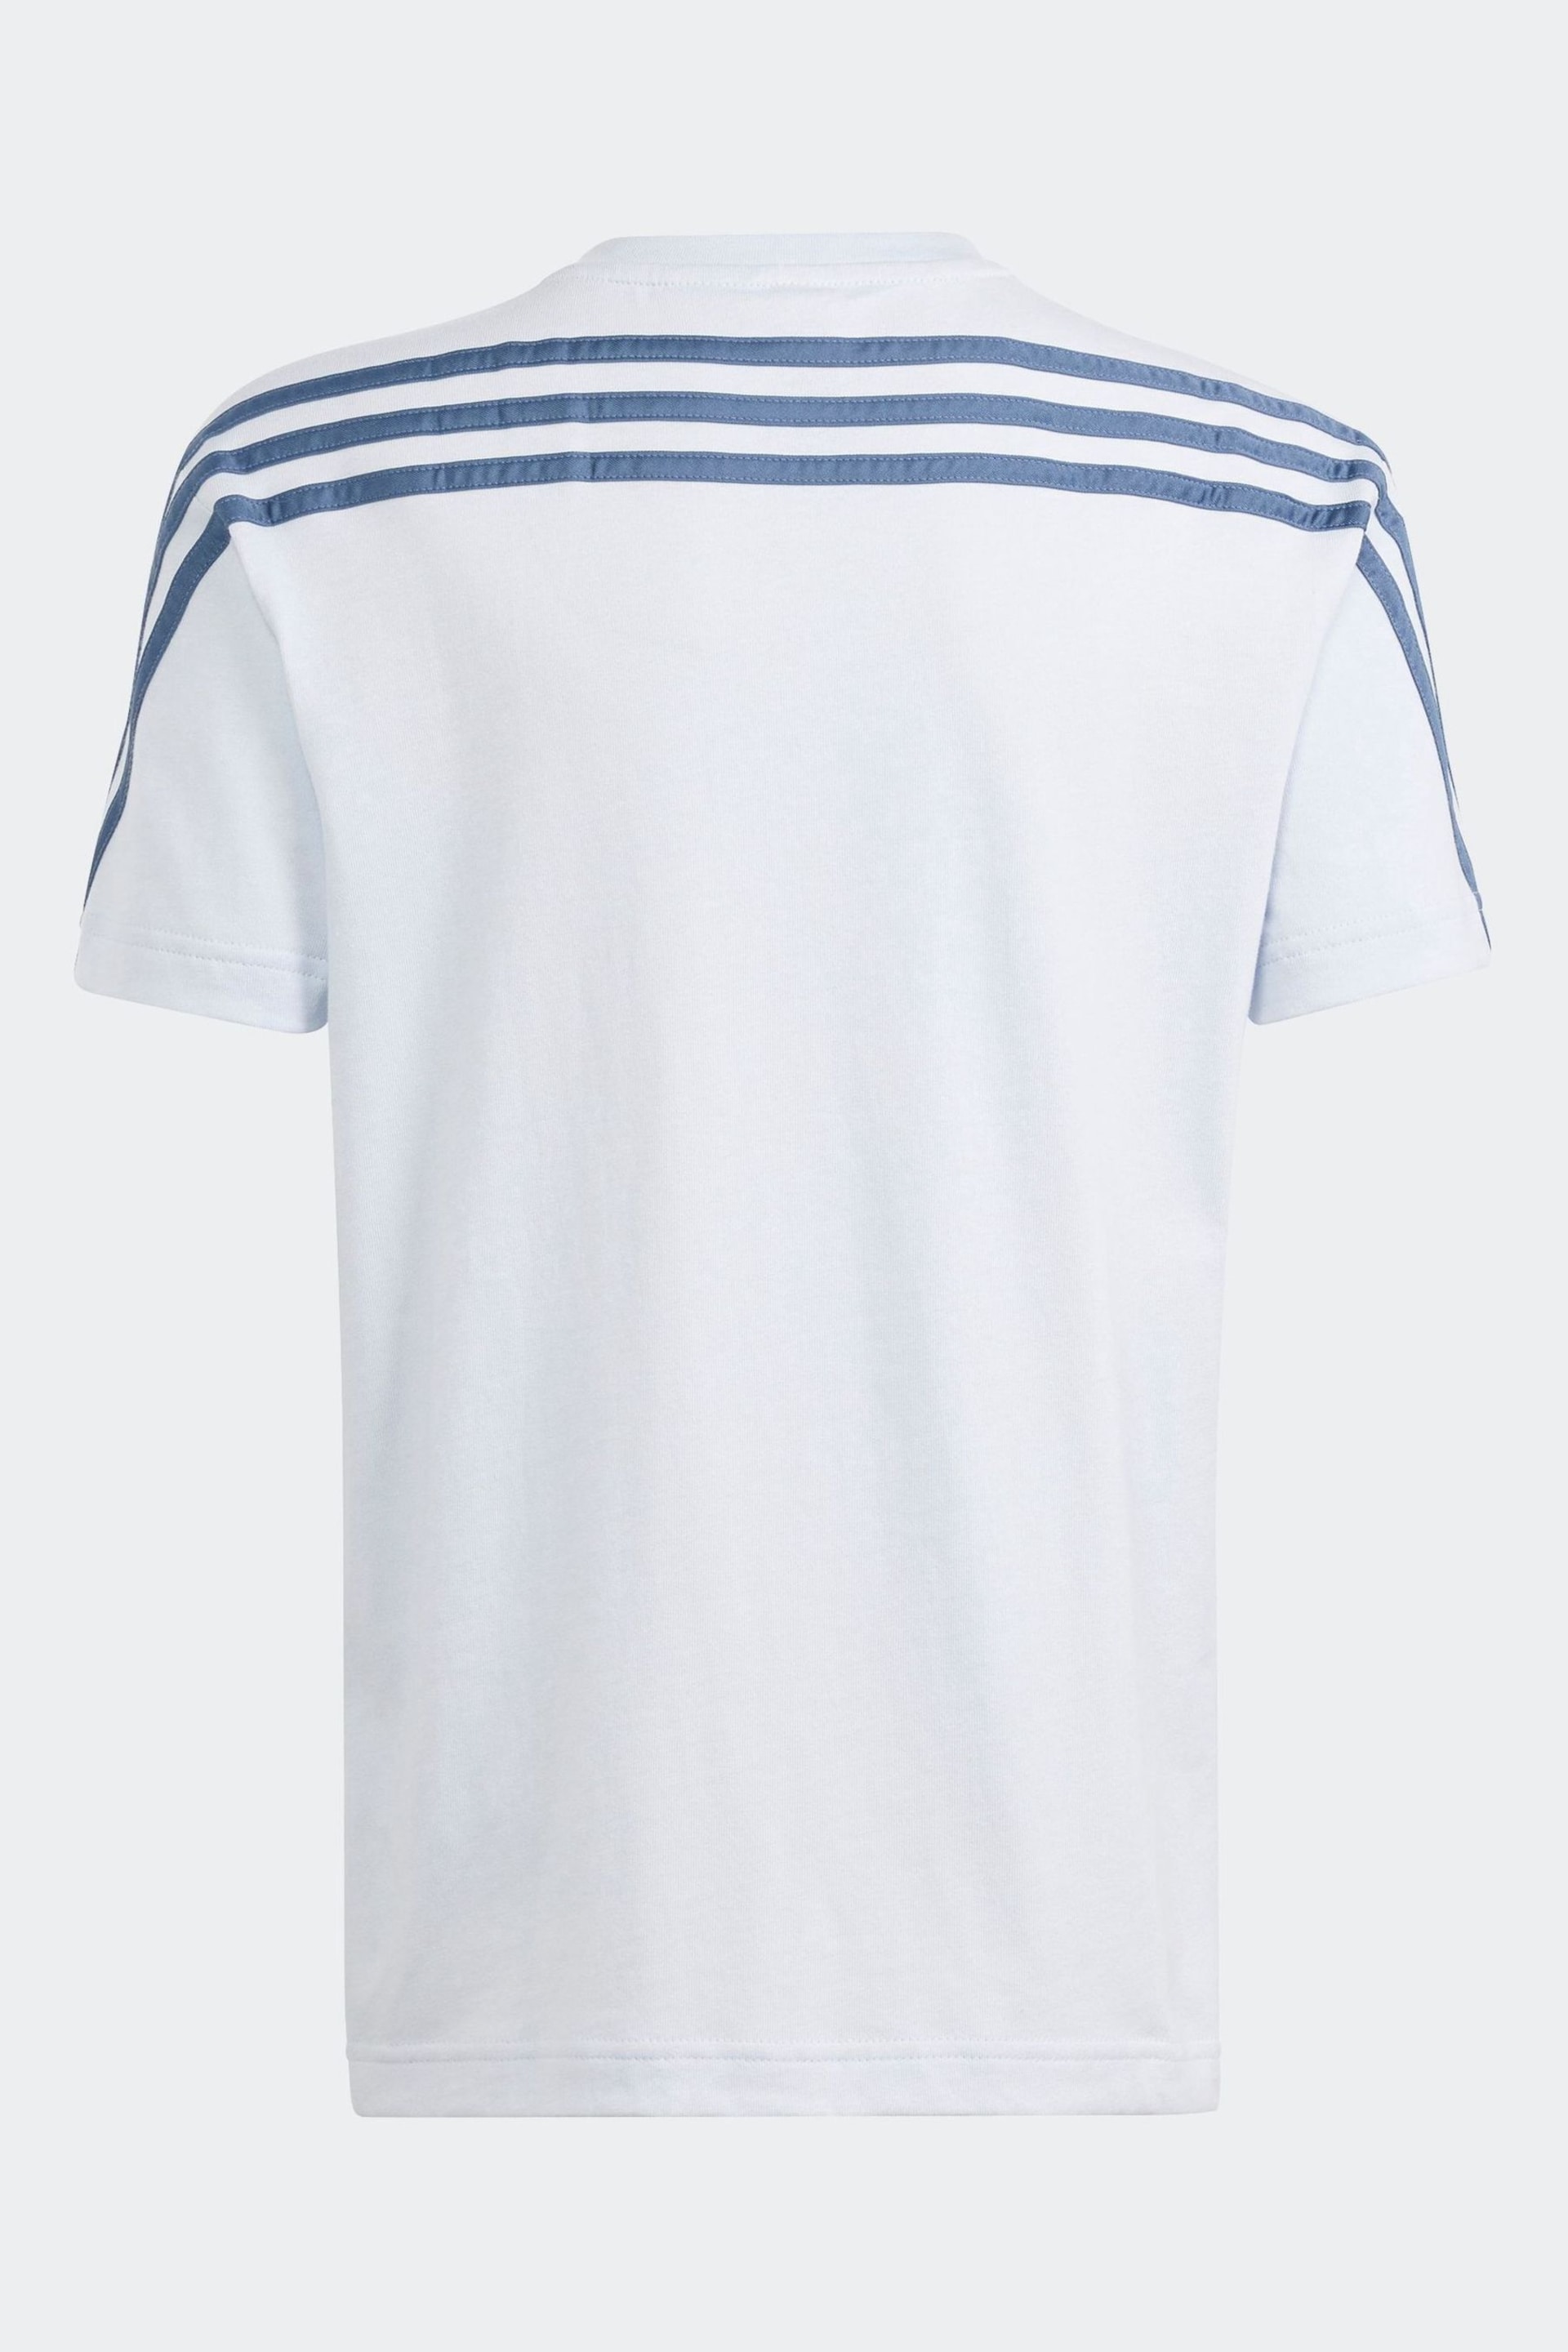 adidas White Chrome Sportswear Future Icons 3-Stripes T-Shirt - Image 2 of 5